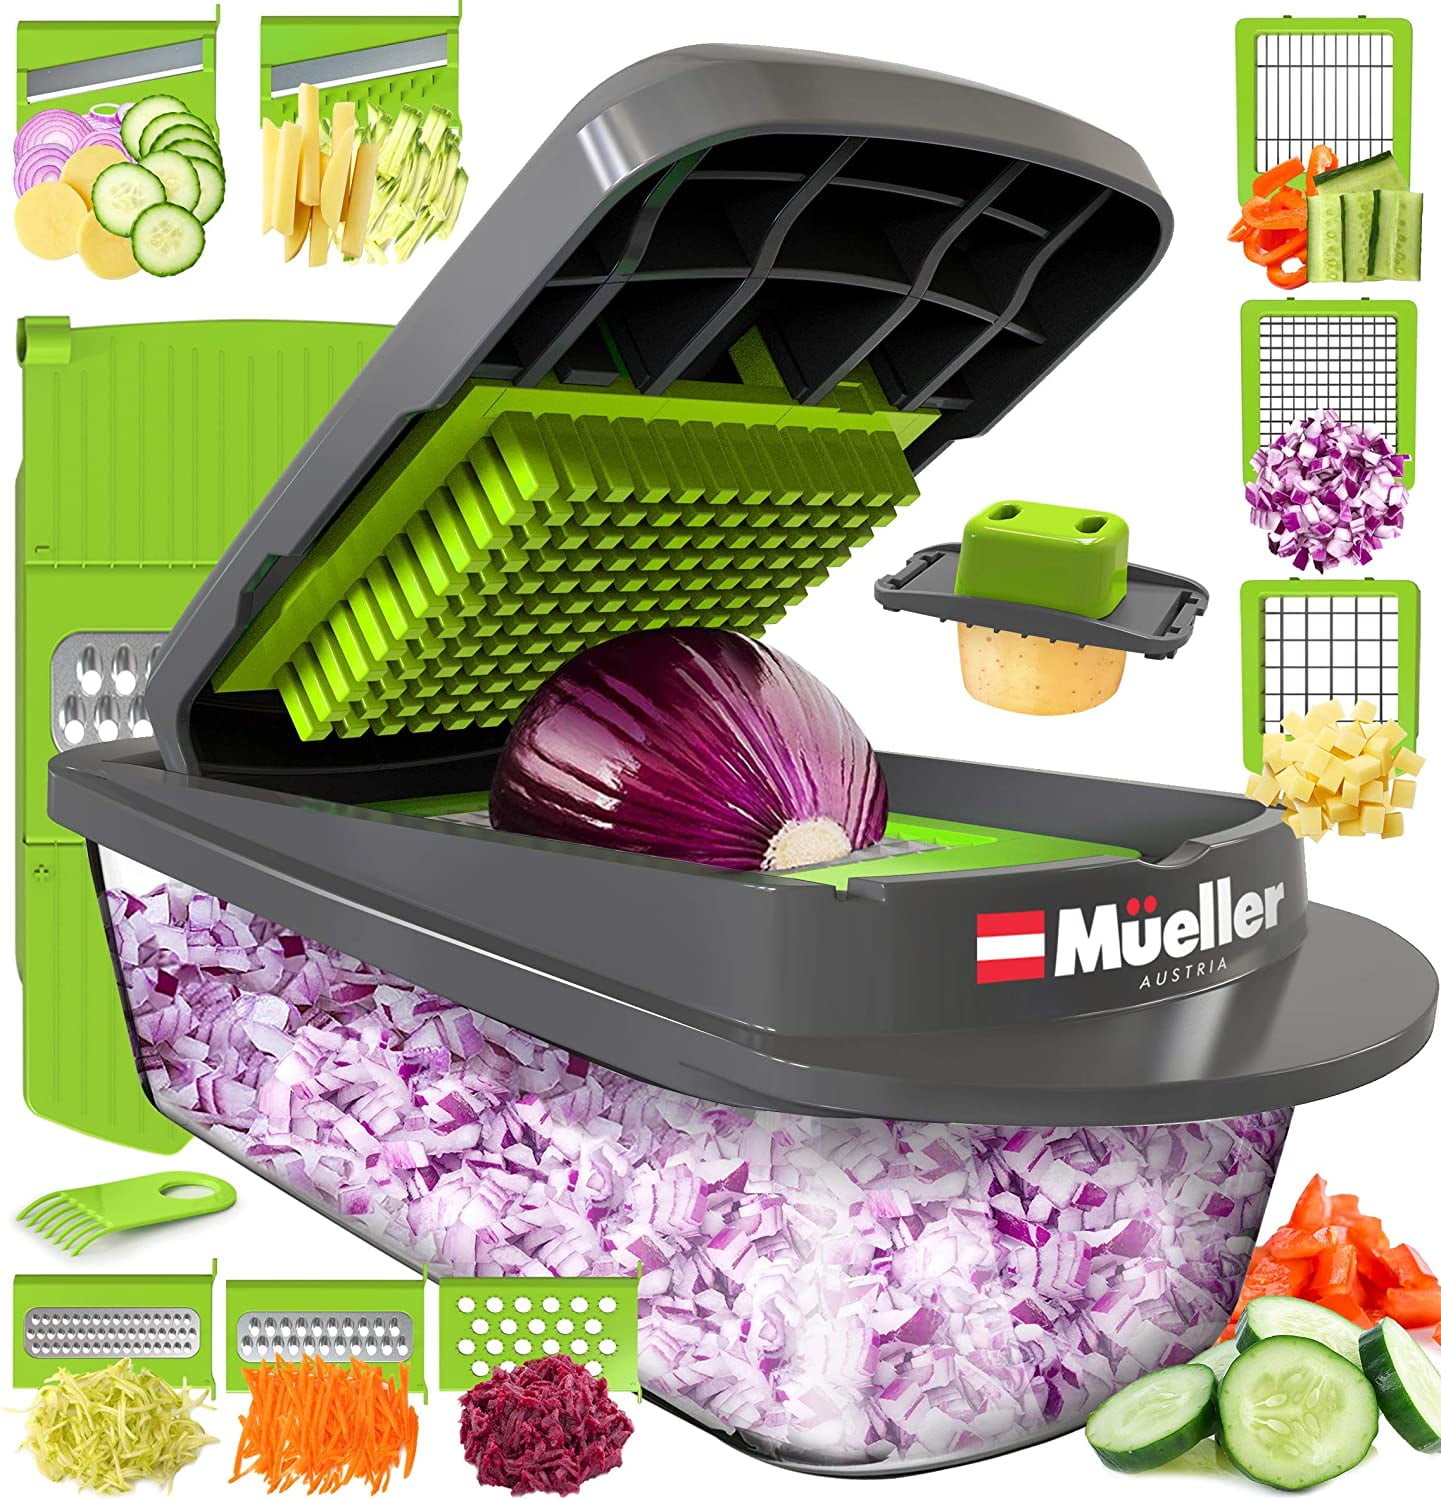 mistress Appraisal calculate Mueller Austria Pro-Series Onion Mincer Chopper, Slicer, Vegetable Chopper,  Cutter, Dicer, Vegetable Slicer with Container and 8 Blades - Walmart.com